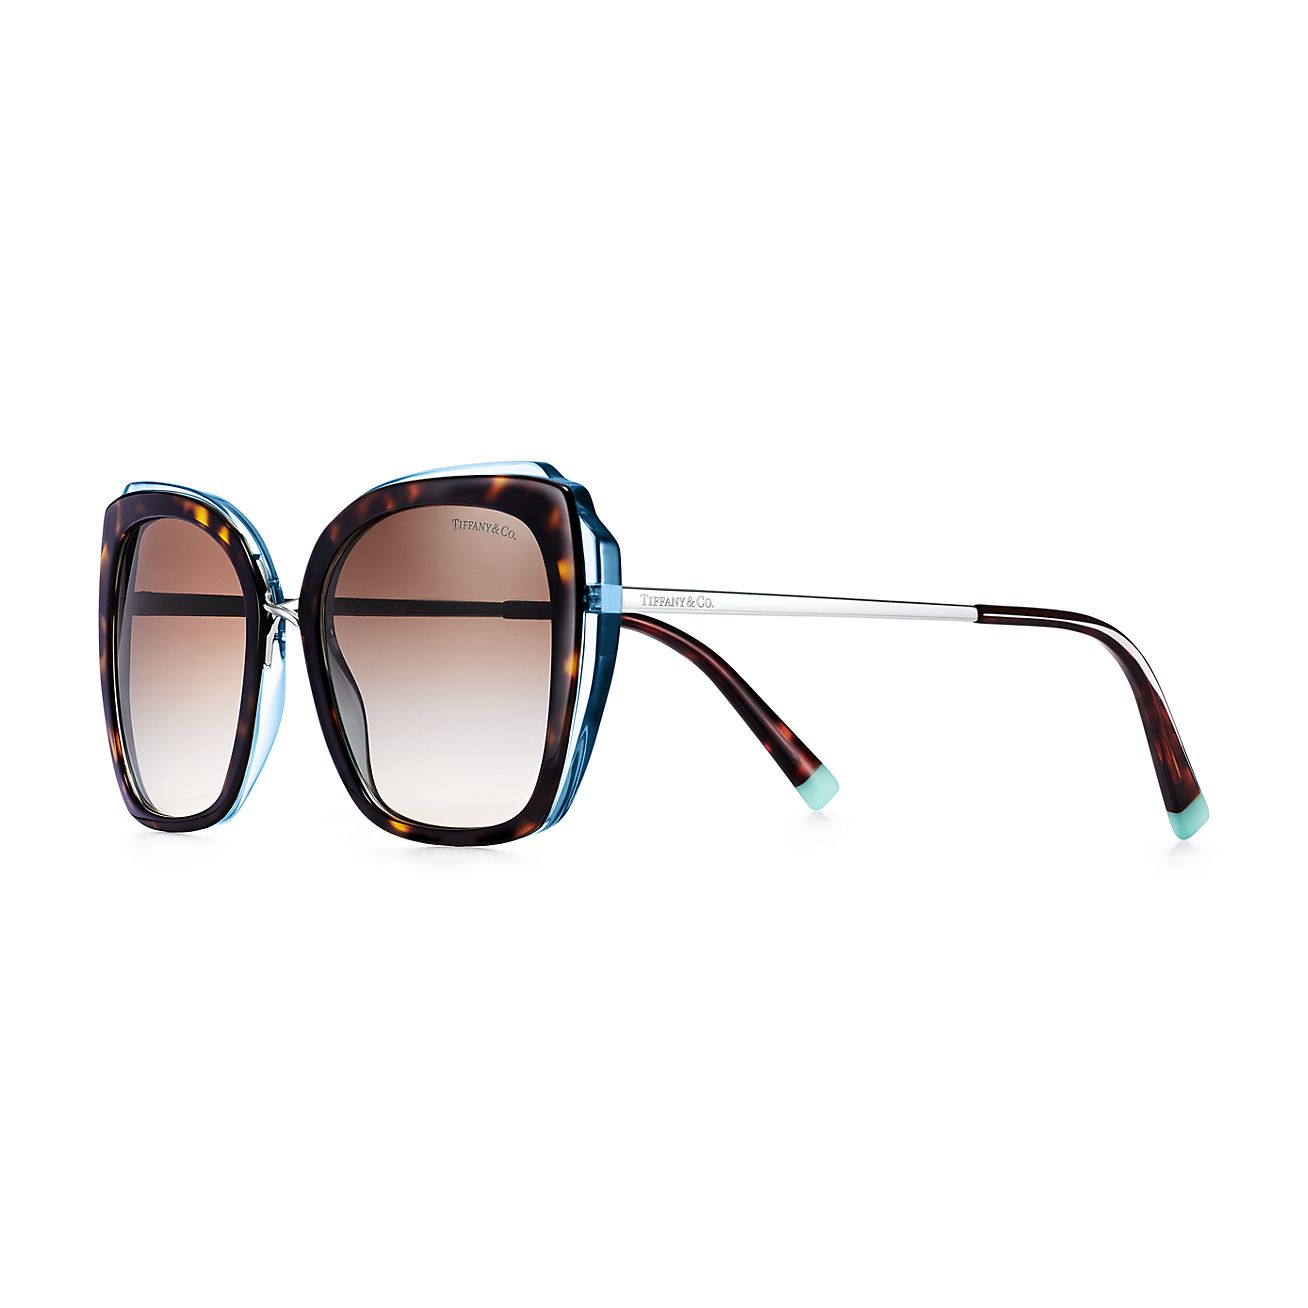 Tiffany Infinity square sunglasses in 